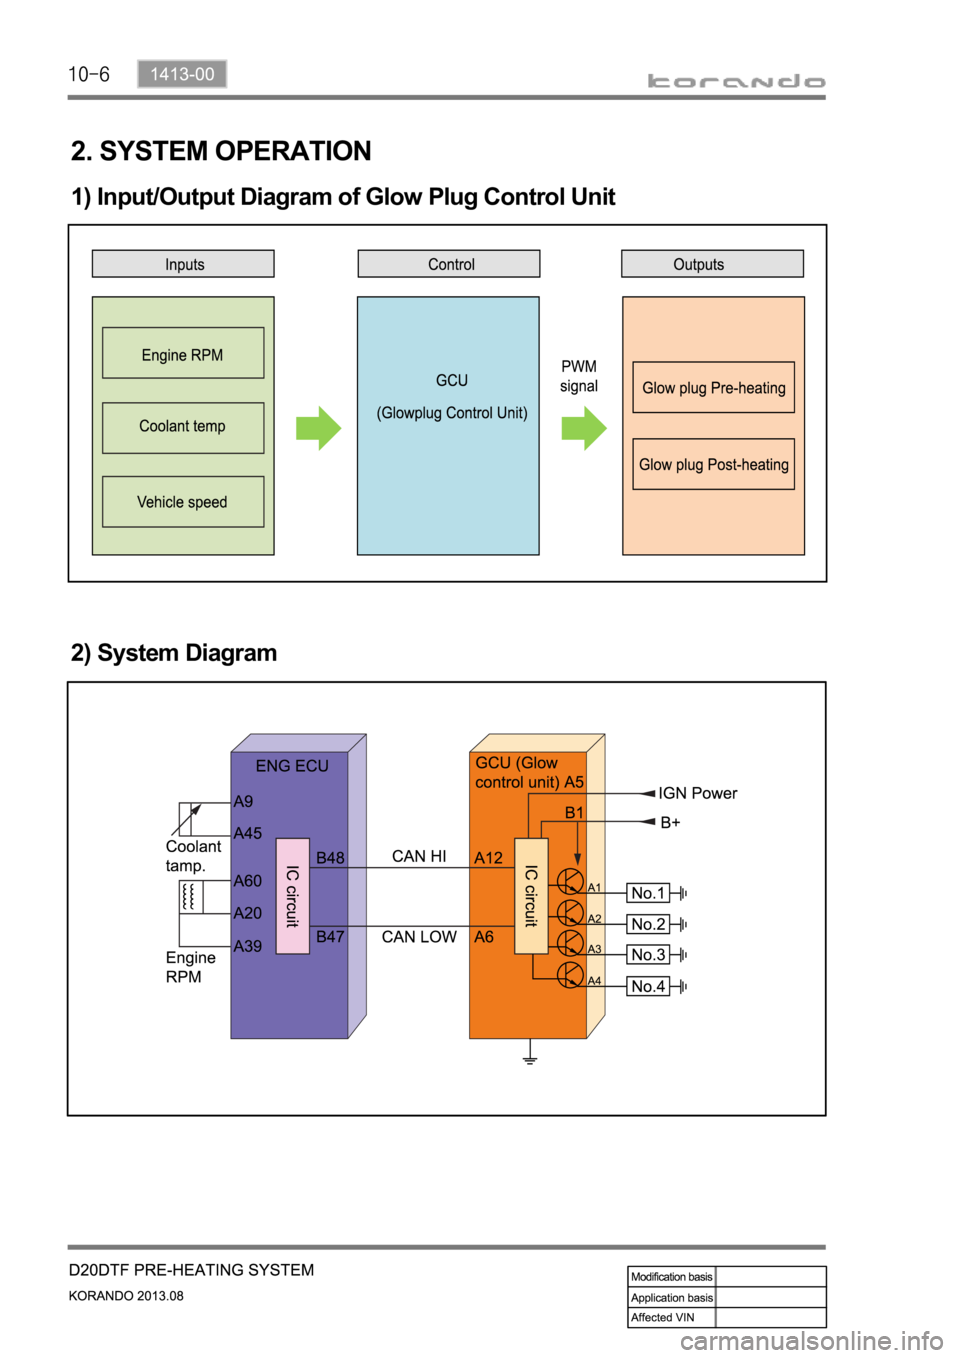 SSANGYONG KORANDO 2013  Service Manual 2. SYSTEM OPERATION
1) Input/Output Diagram of Glow Plug Control Unit
2) System Diagram 